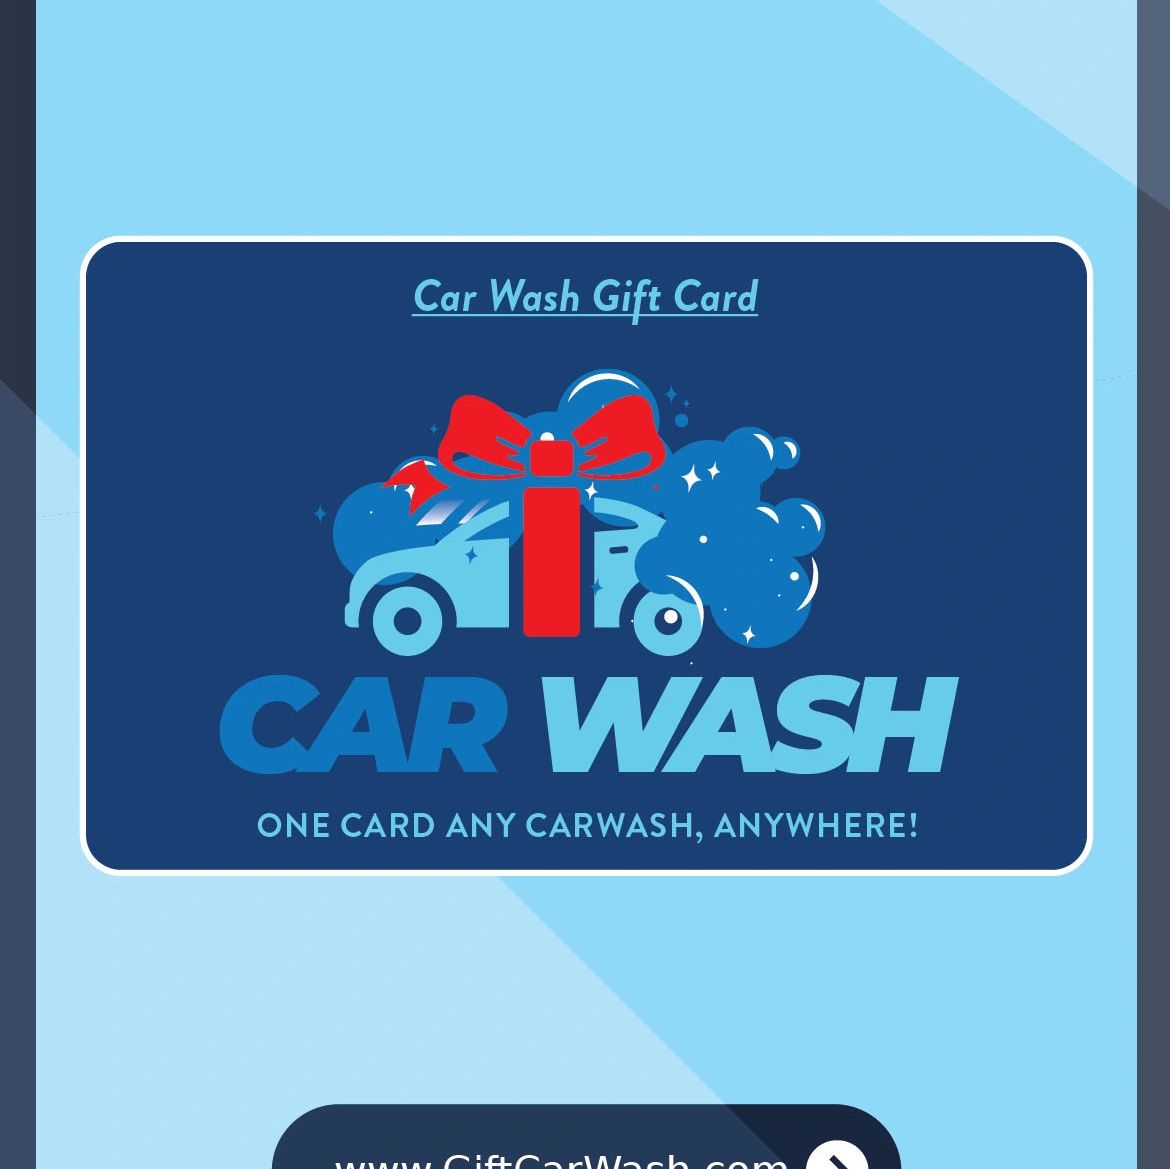 CarWashGiftCard.com